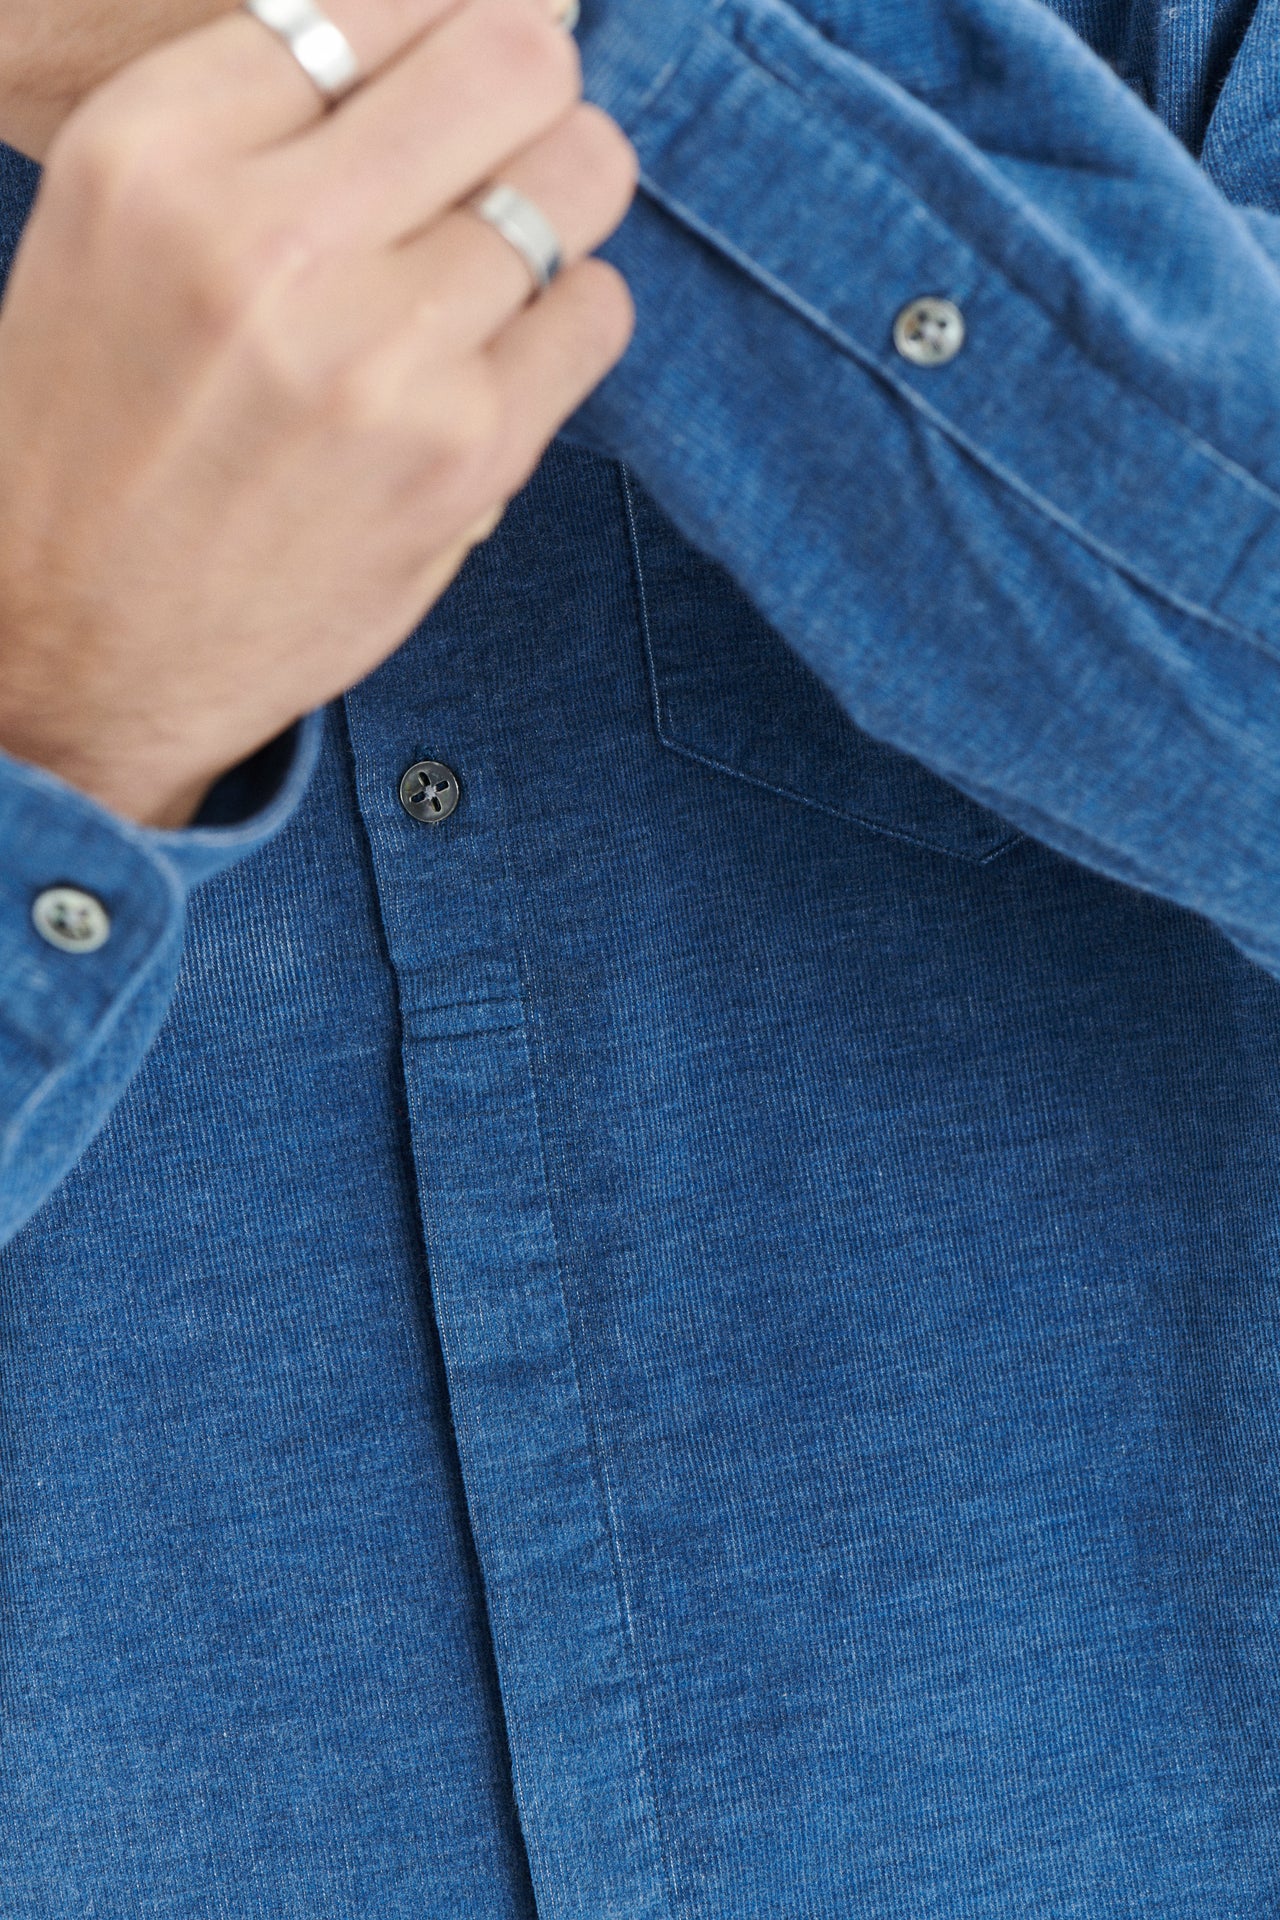 Zen Shirt in an Indigo Blue Japanese Baby Corduroy Cotton